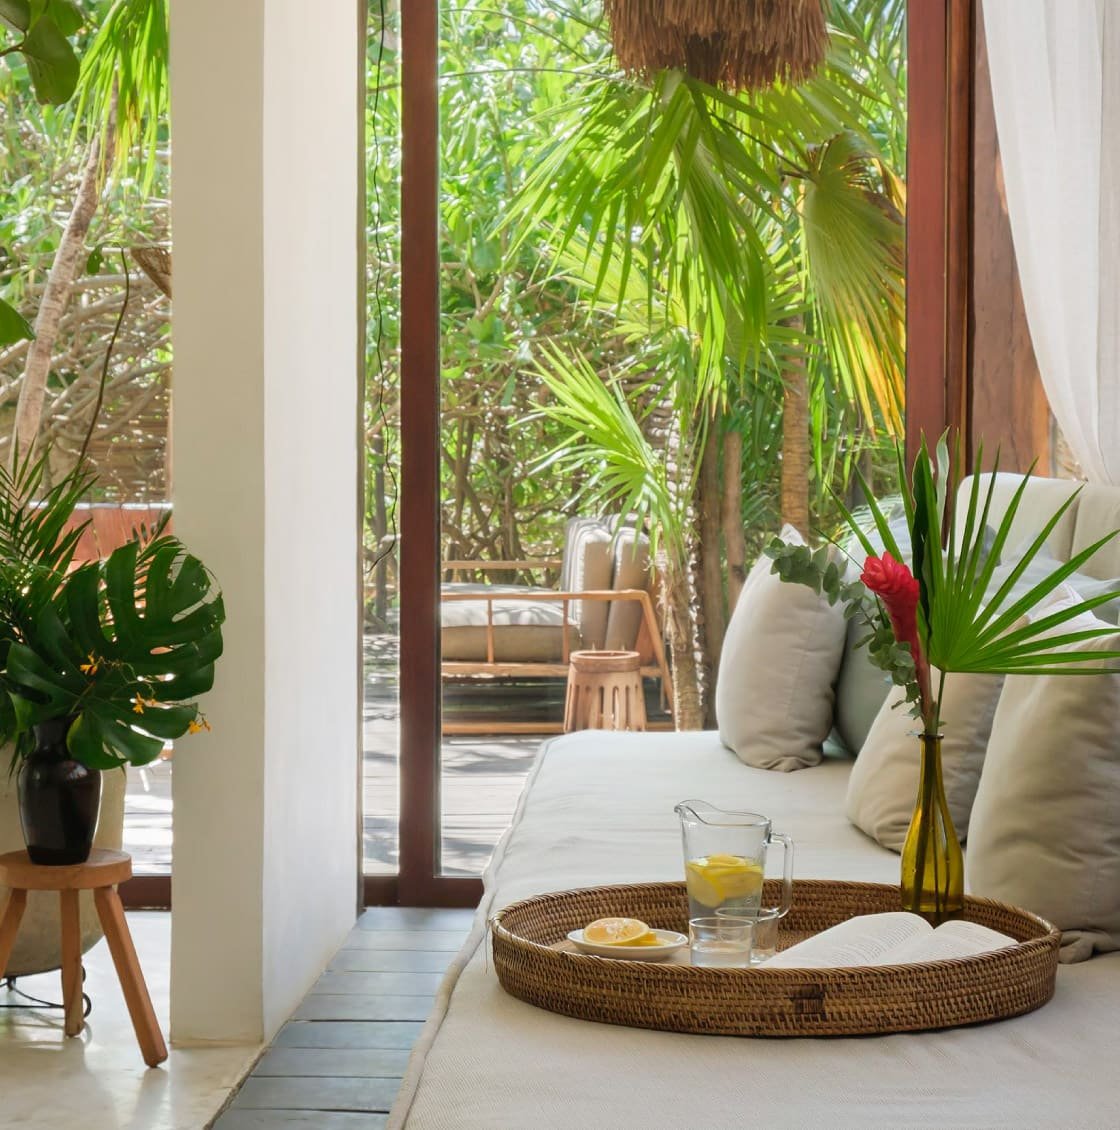 Breakfast at Casa Chakté - Exclusive villa in Tulum, Mexico with ocean and garden view - Aldea Canzul